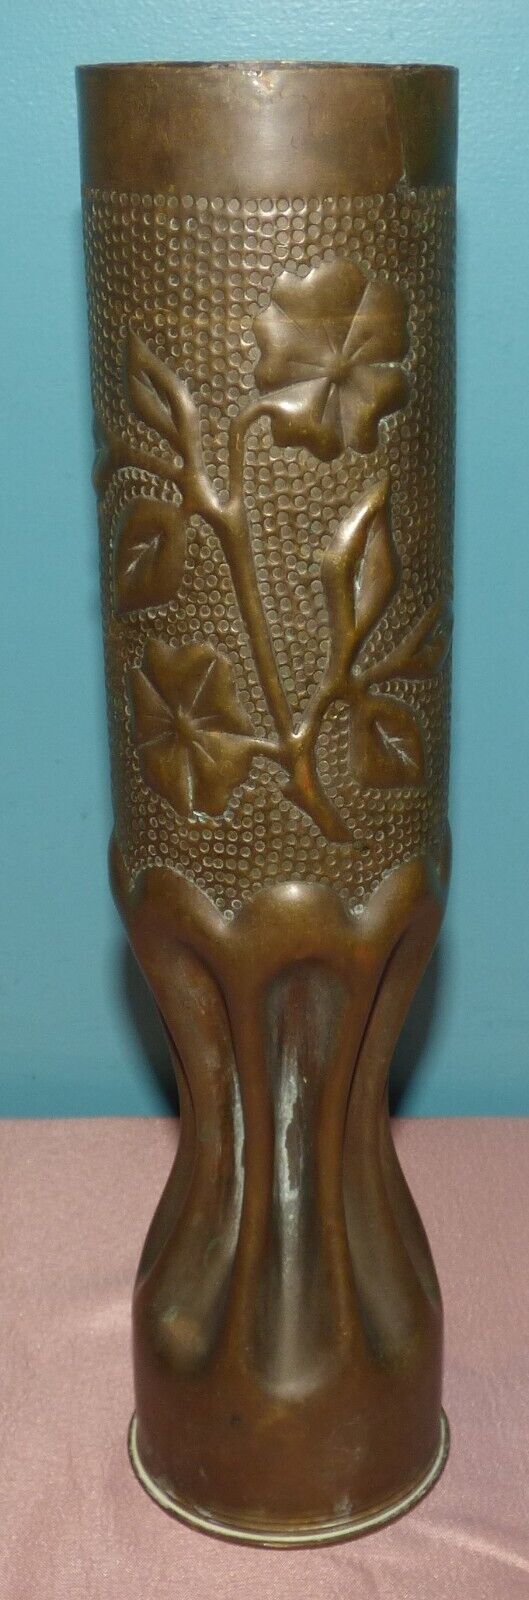 WWI Trench Art Brass Shell Casing Vase Flower Pattern Design 13 1/2